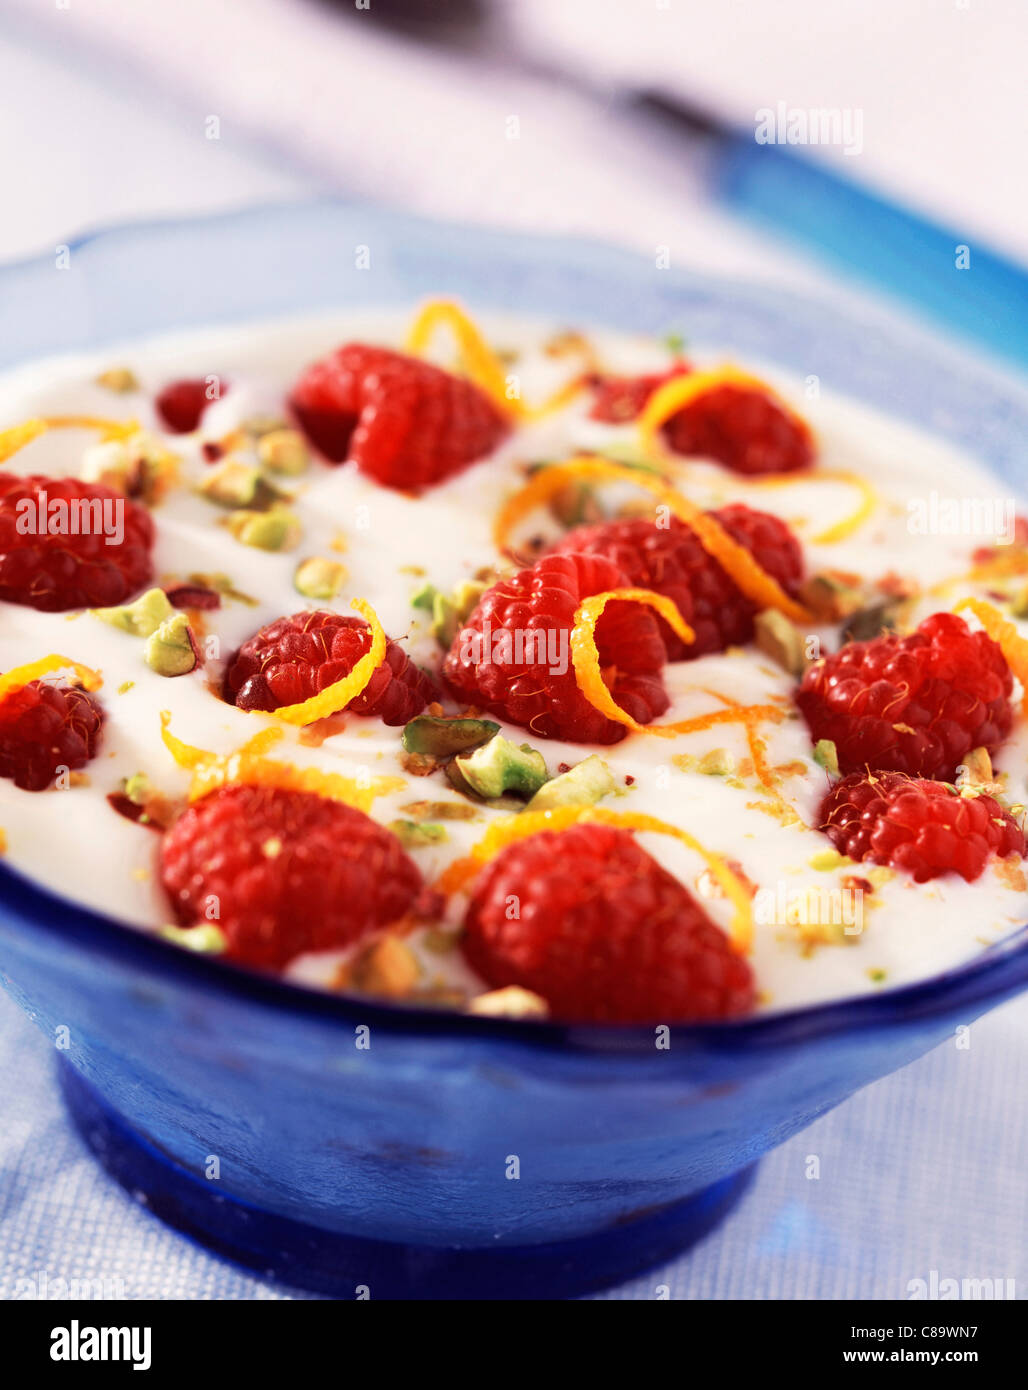 Yoghurt with raspberries Stock Photo